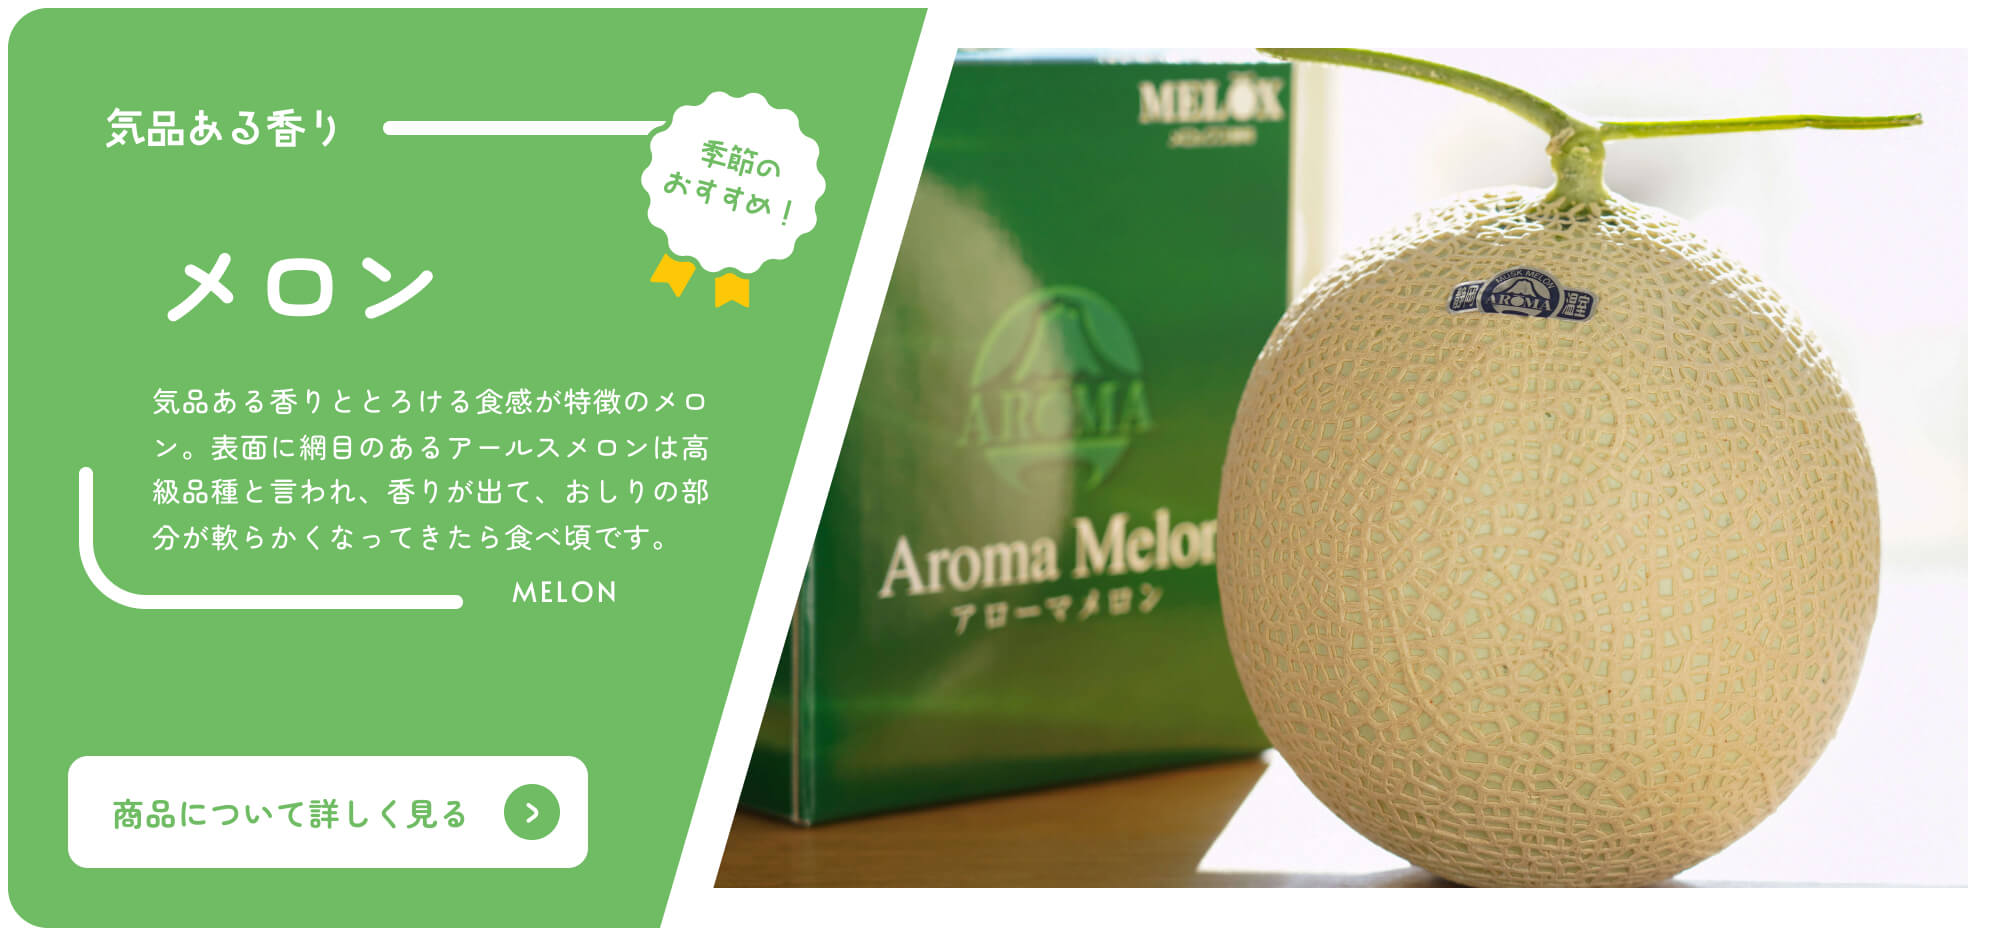 Kaufen Sie Shizuoka Online-Katalog Saisonal empfohlene Melone